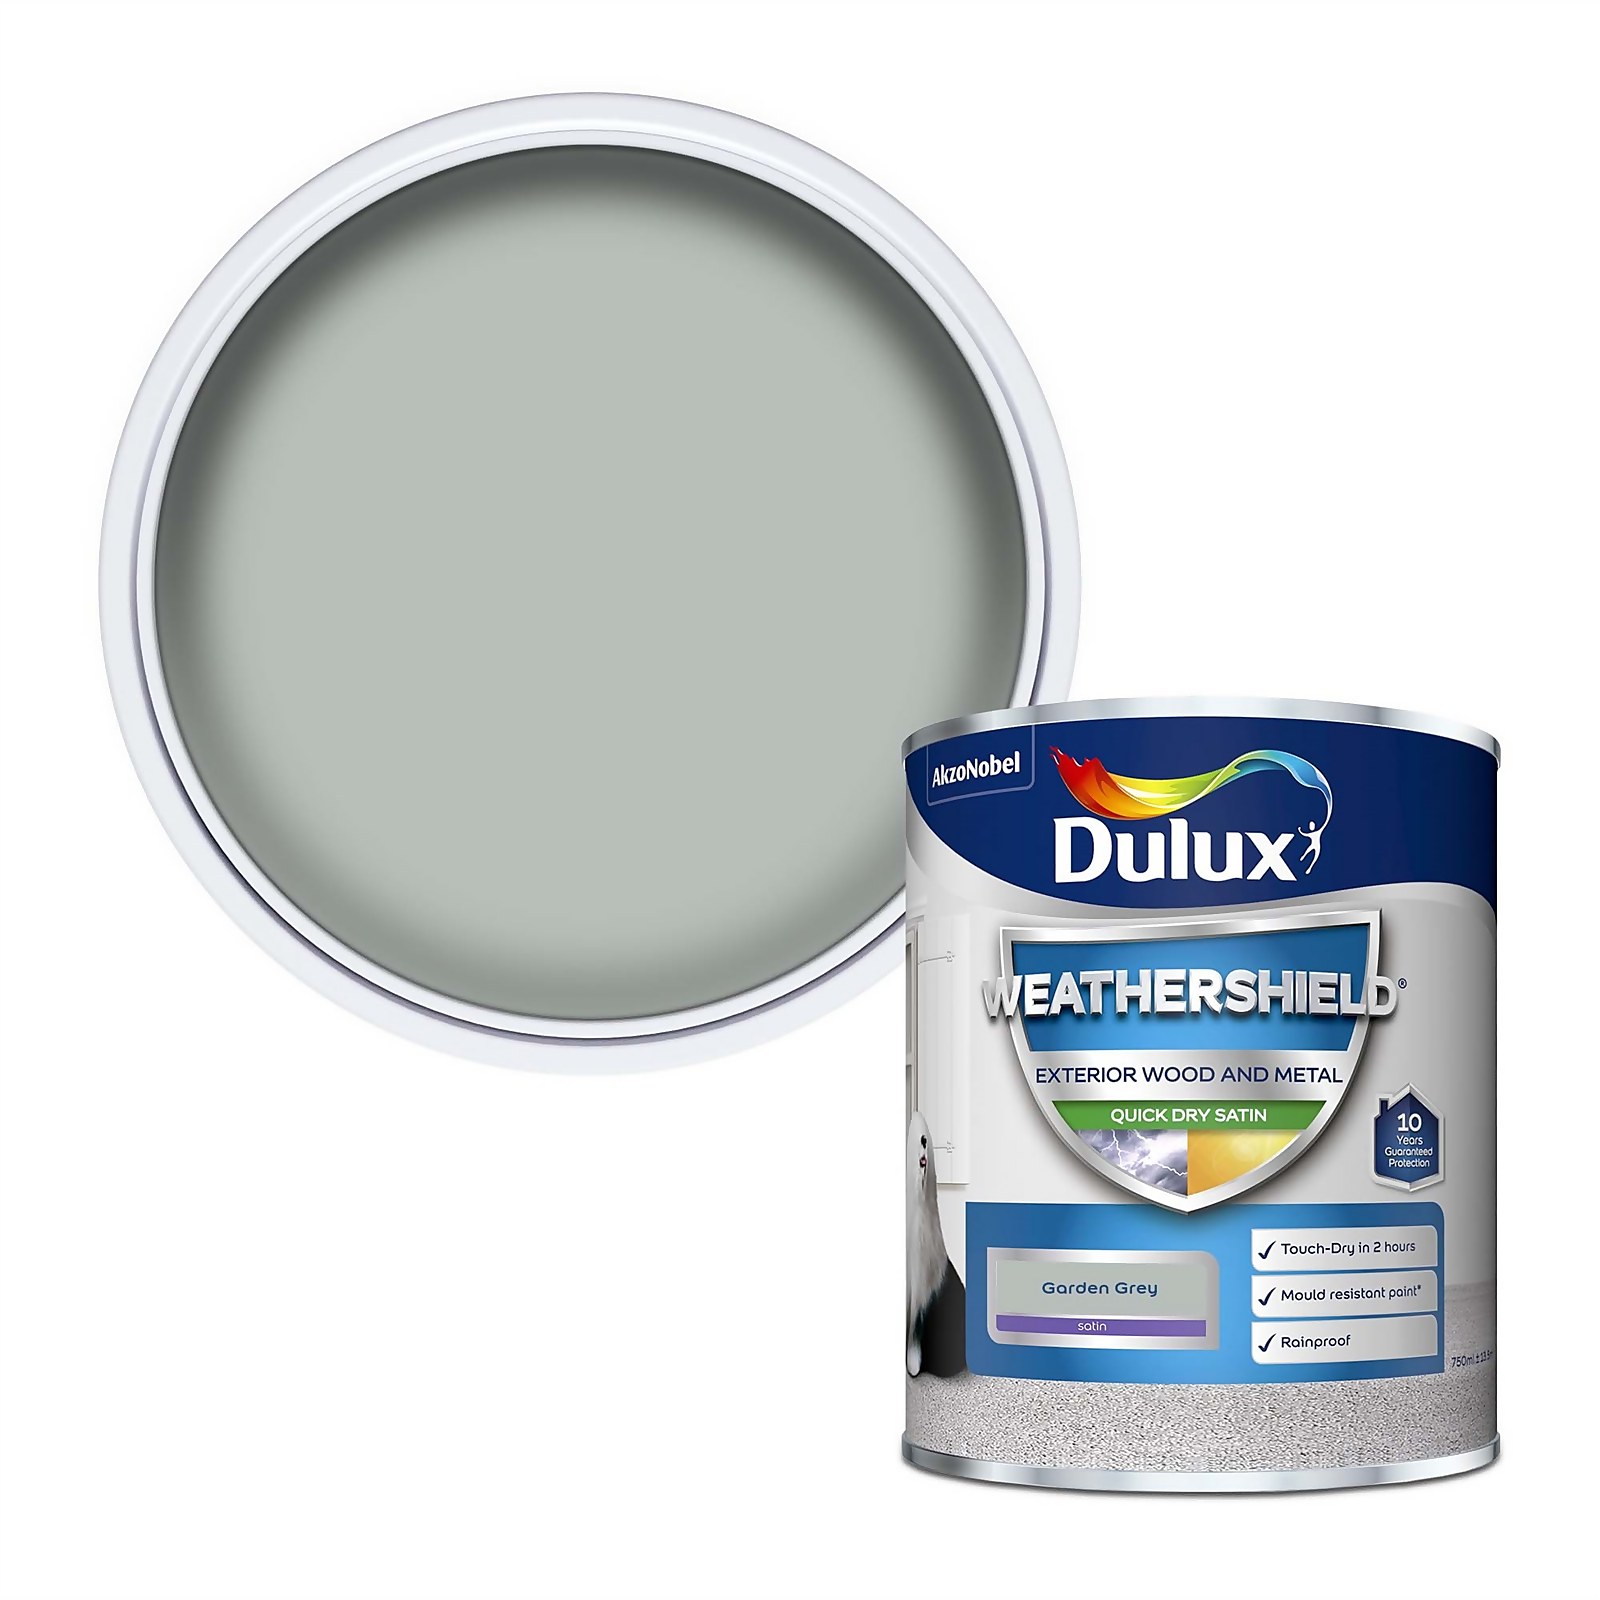 Photo of Dulux Weathershield Quick Dry Satin Paint - Garden Grey - 750ml